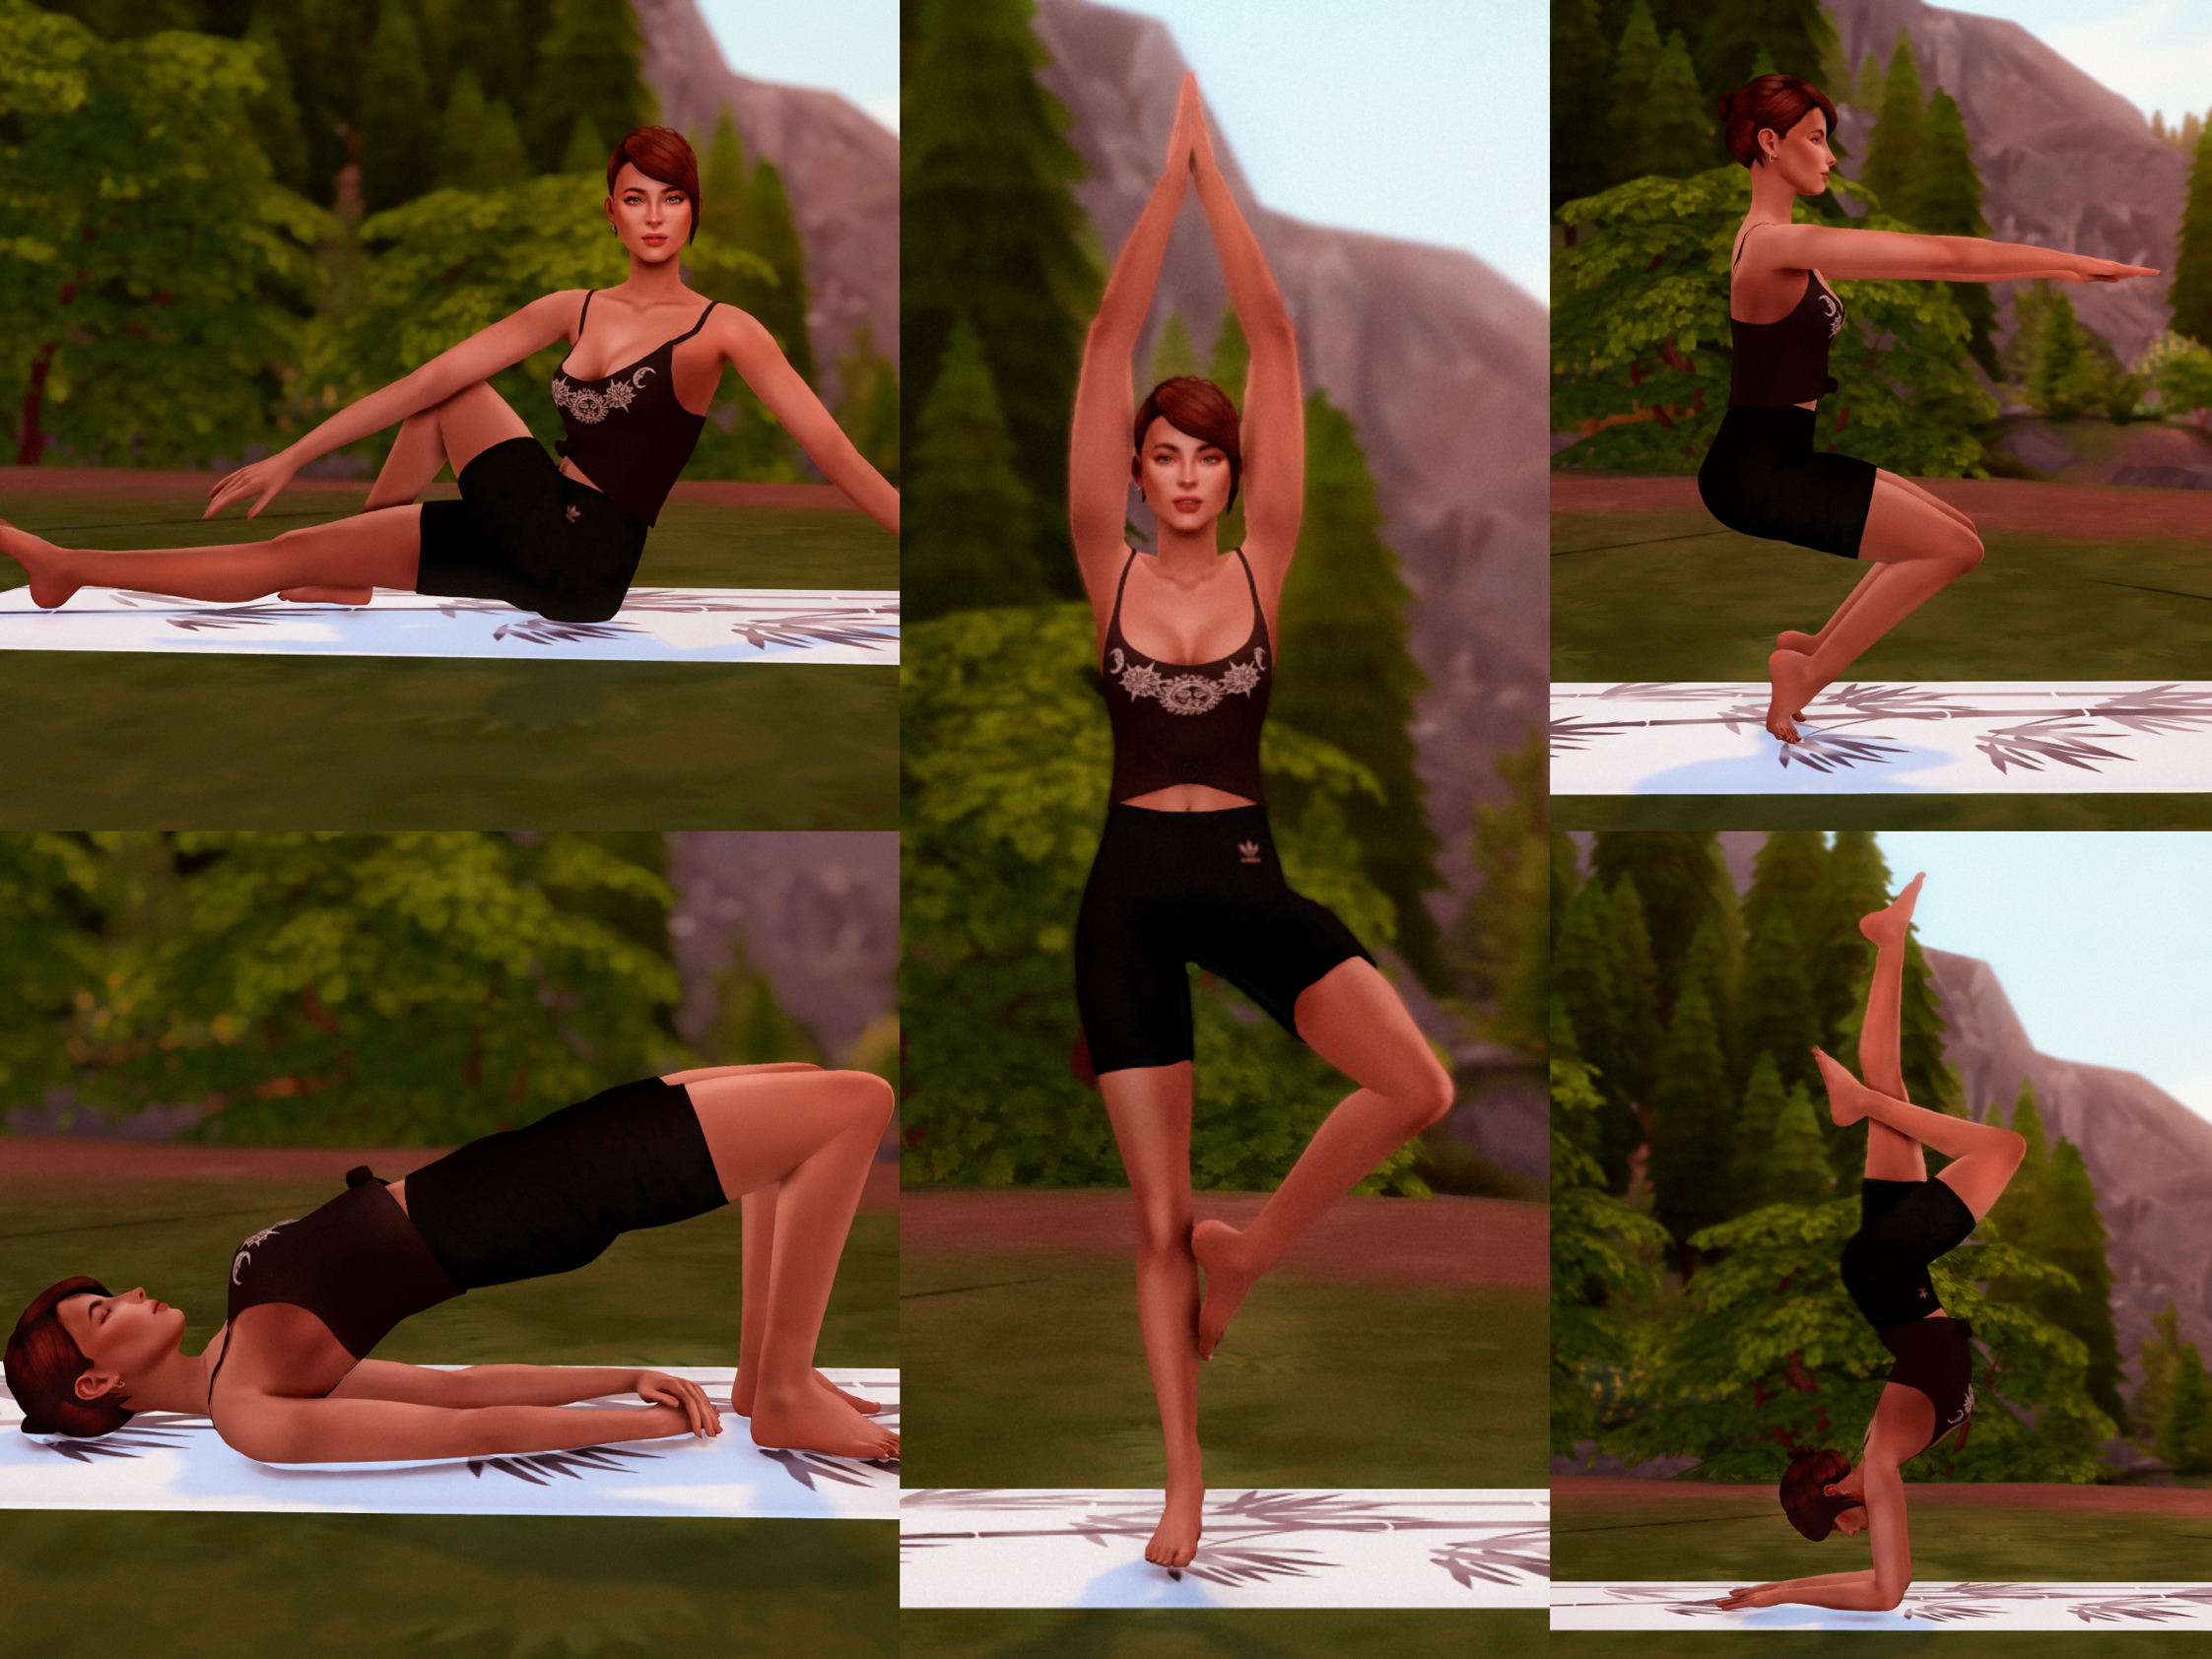 Hot Yoga Poses - The Sims 4 Mods - CurseForge